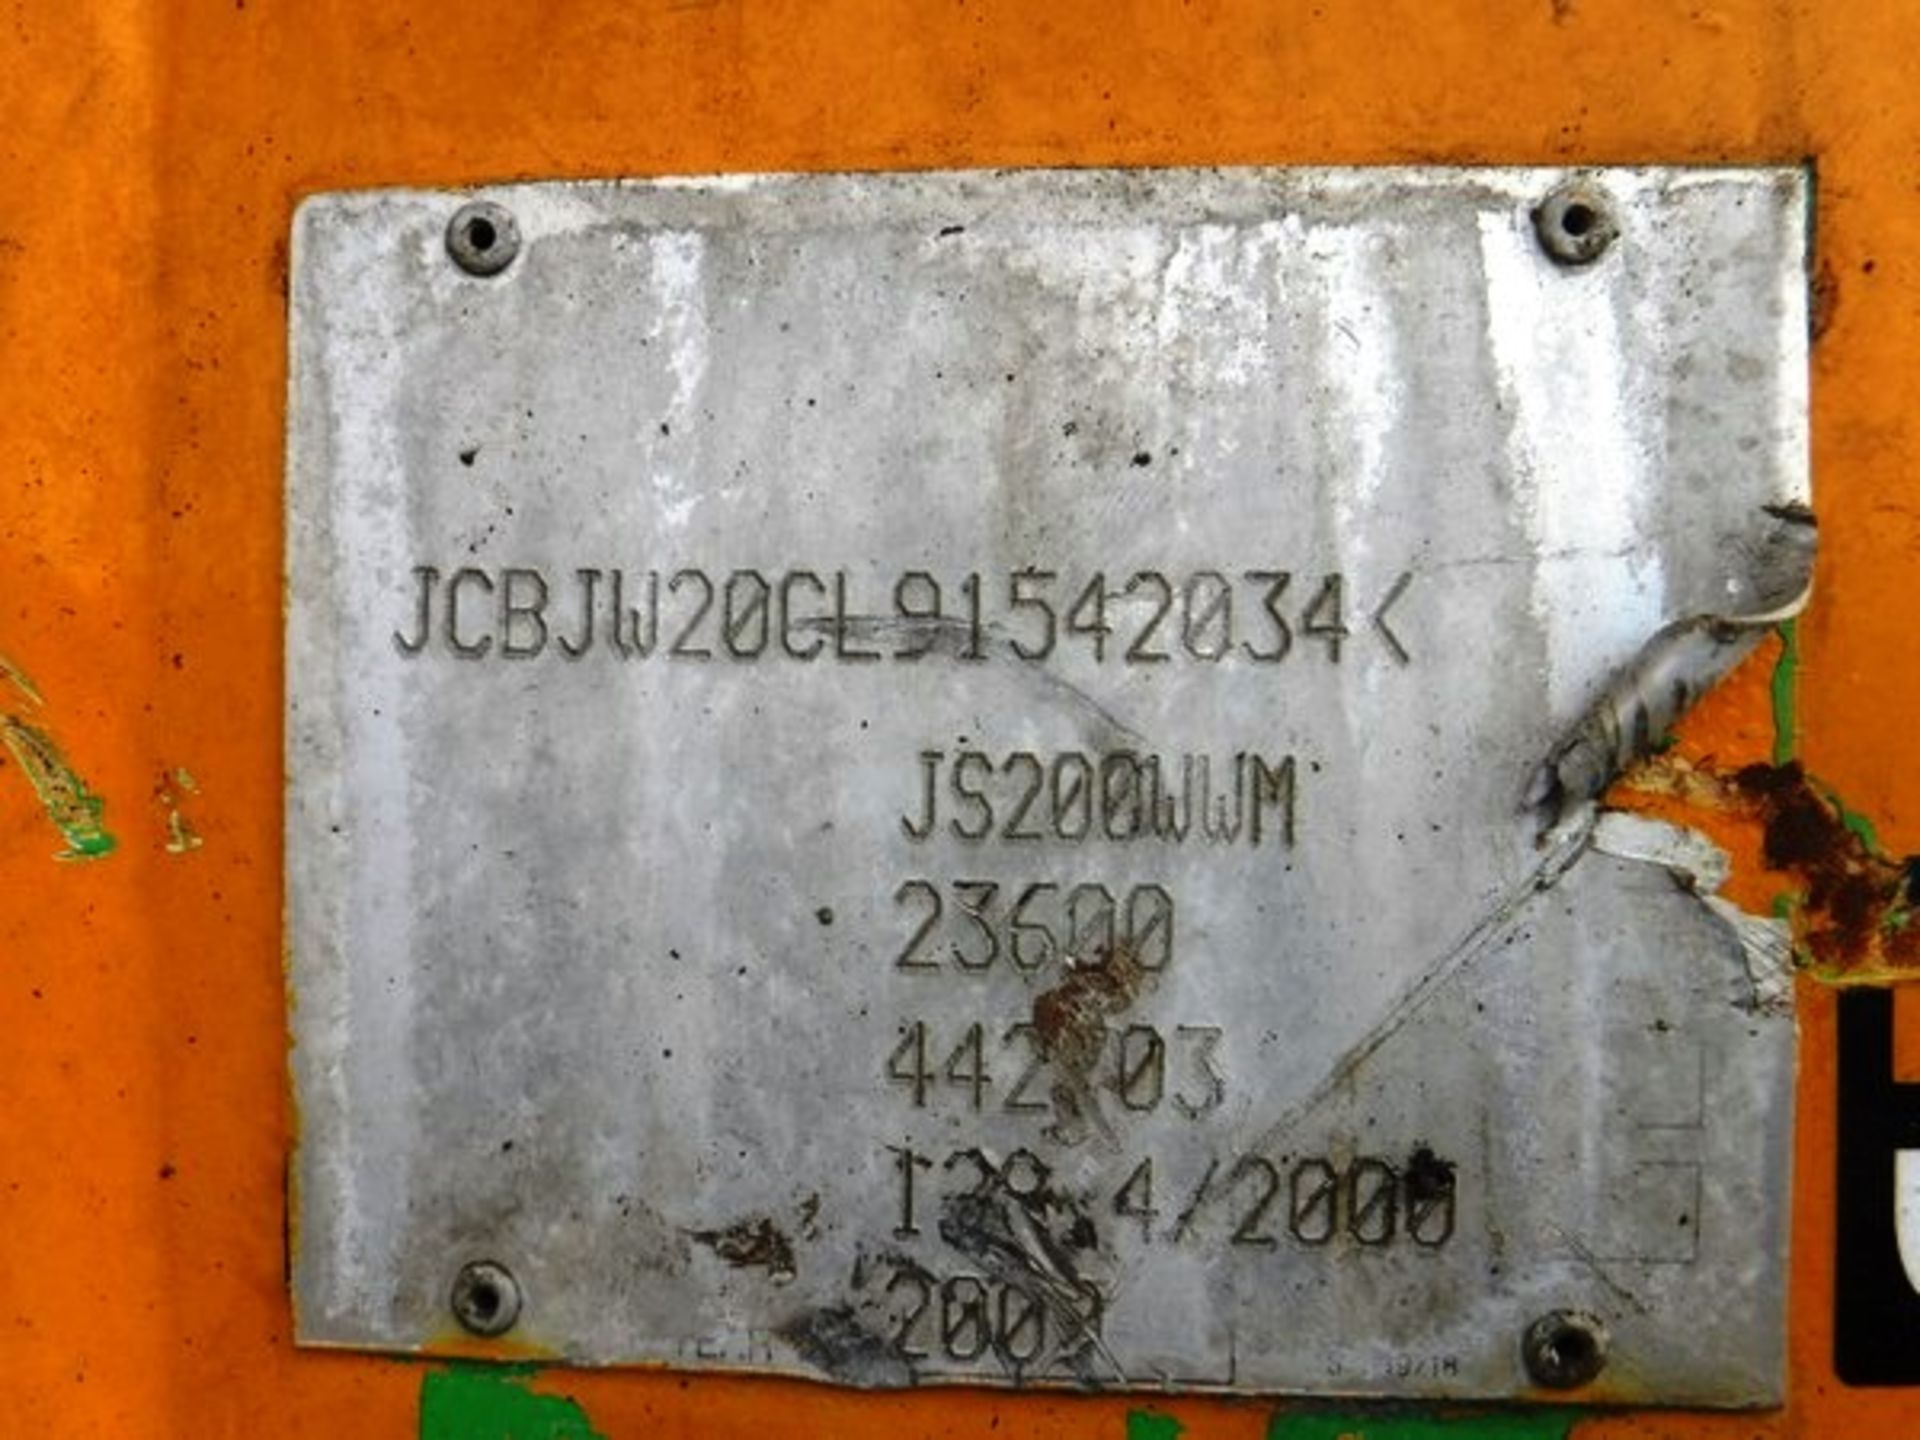 2009 JCB JS 200W wheeled excavator s/n JCBJW200L91542034. 11518hrs (not verified) - Bild 15 aus 15